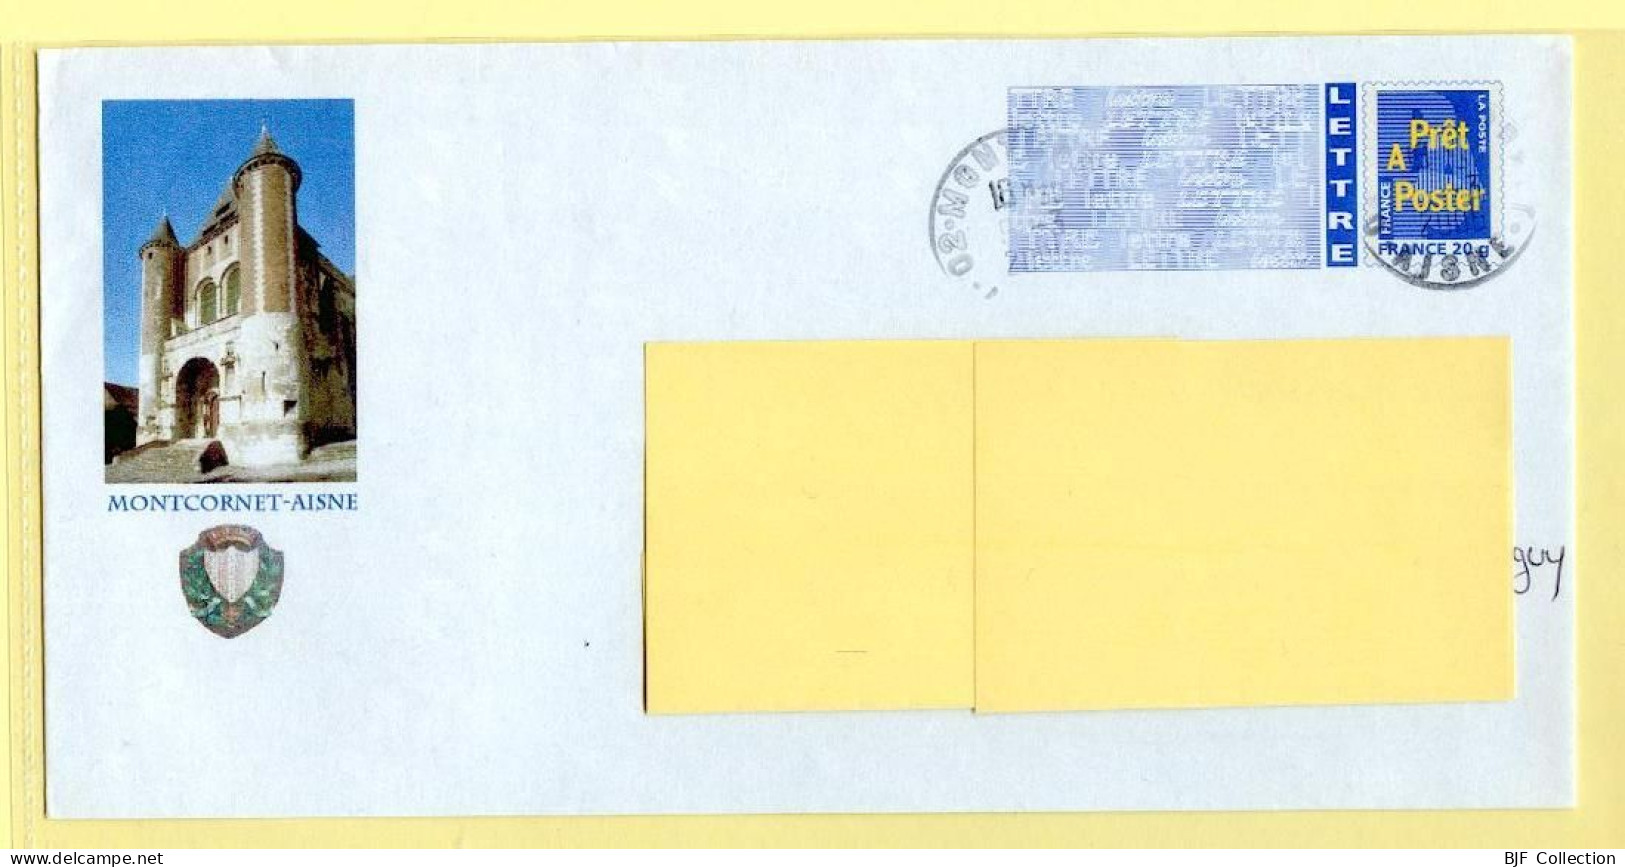 PAP Logo Bleu - MONTCORNET (02) (N° 809 – Lot B2K/0511152) – 9/03/2006 - Prêts-à-poster:Overprinting/Blue Logo